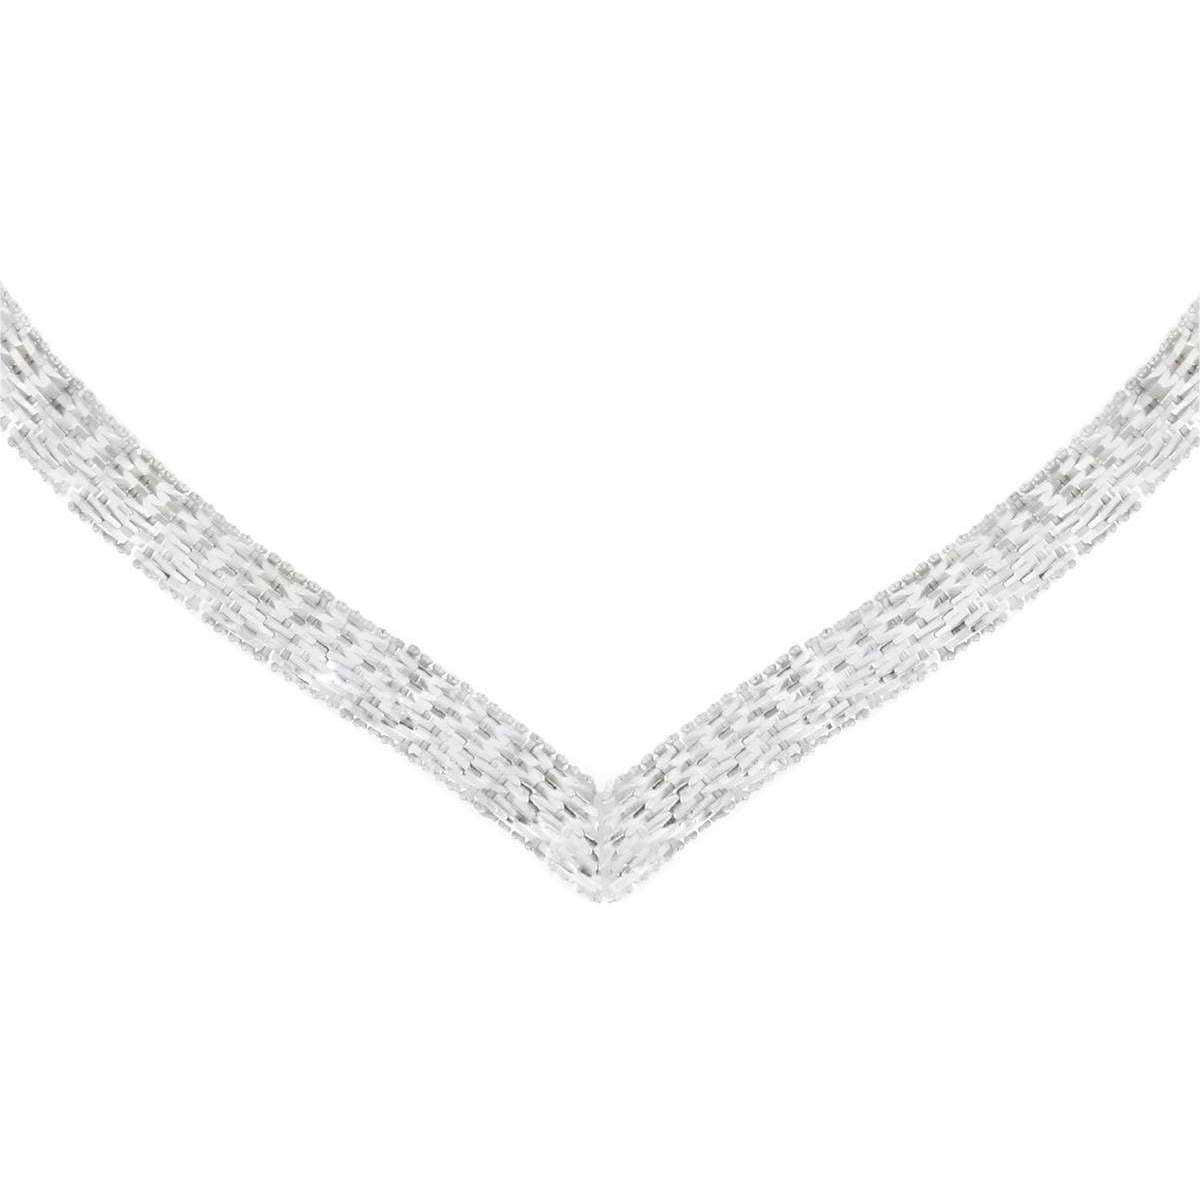 KJ Beckett Chevron V Shaped Necklace - Silver